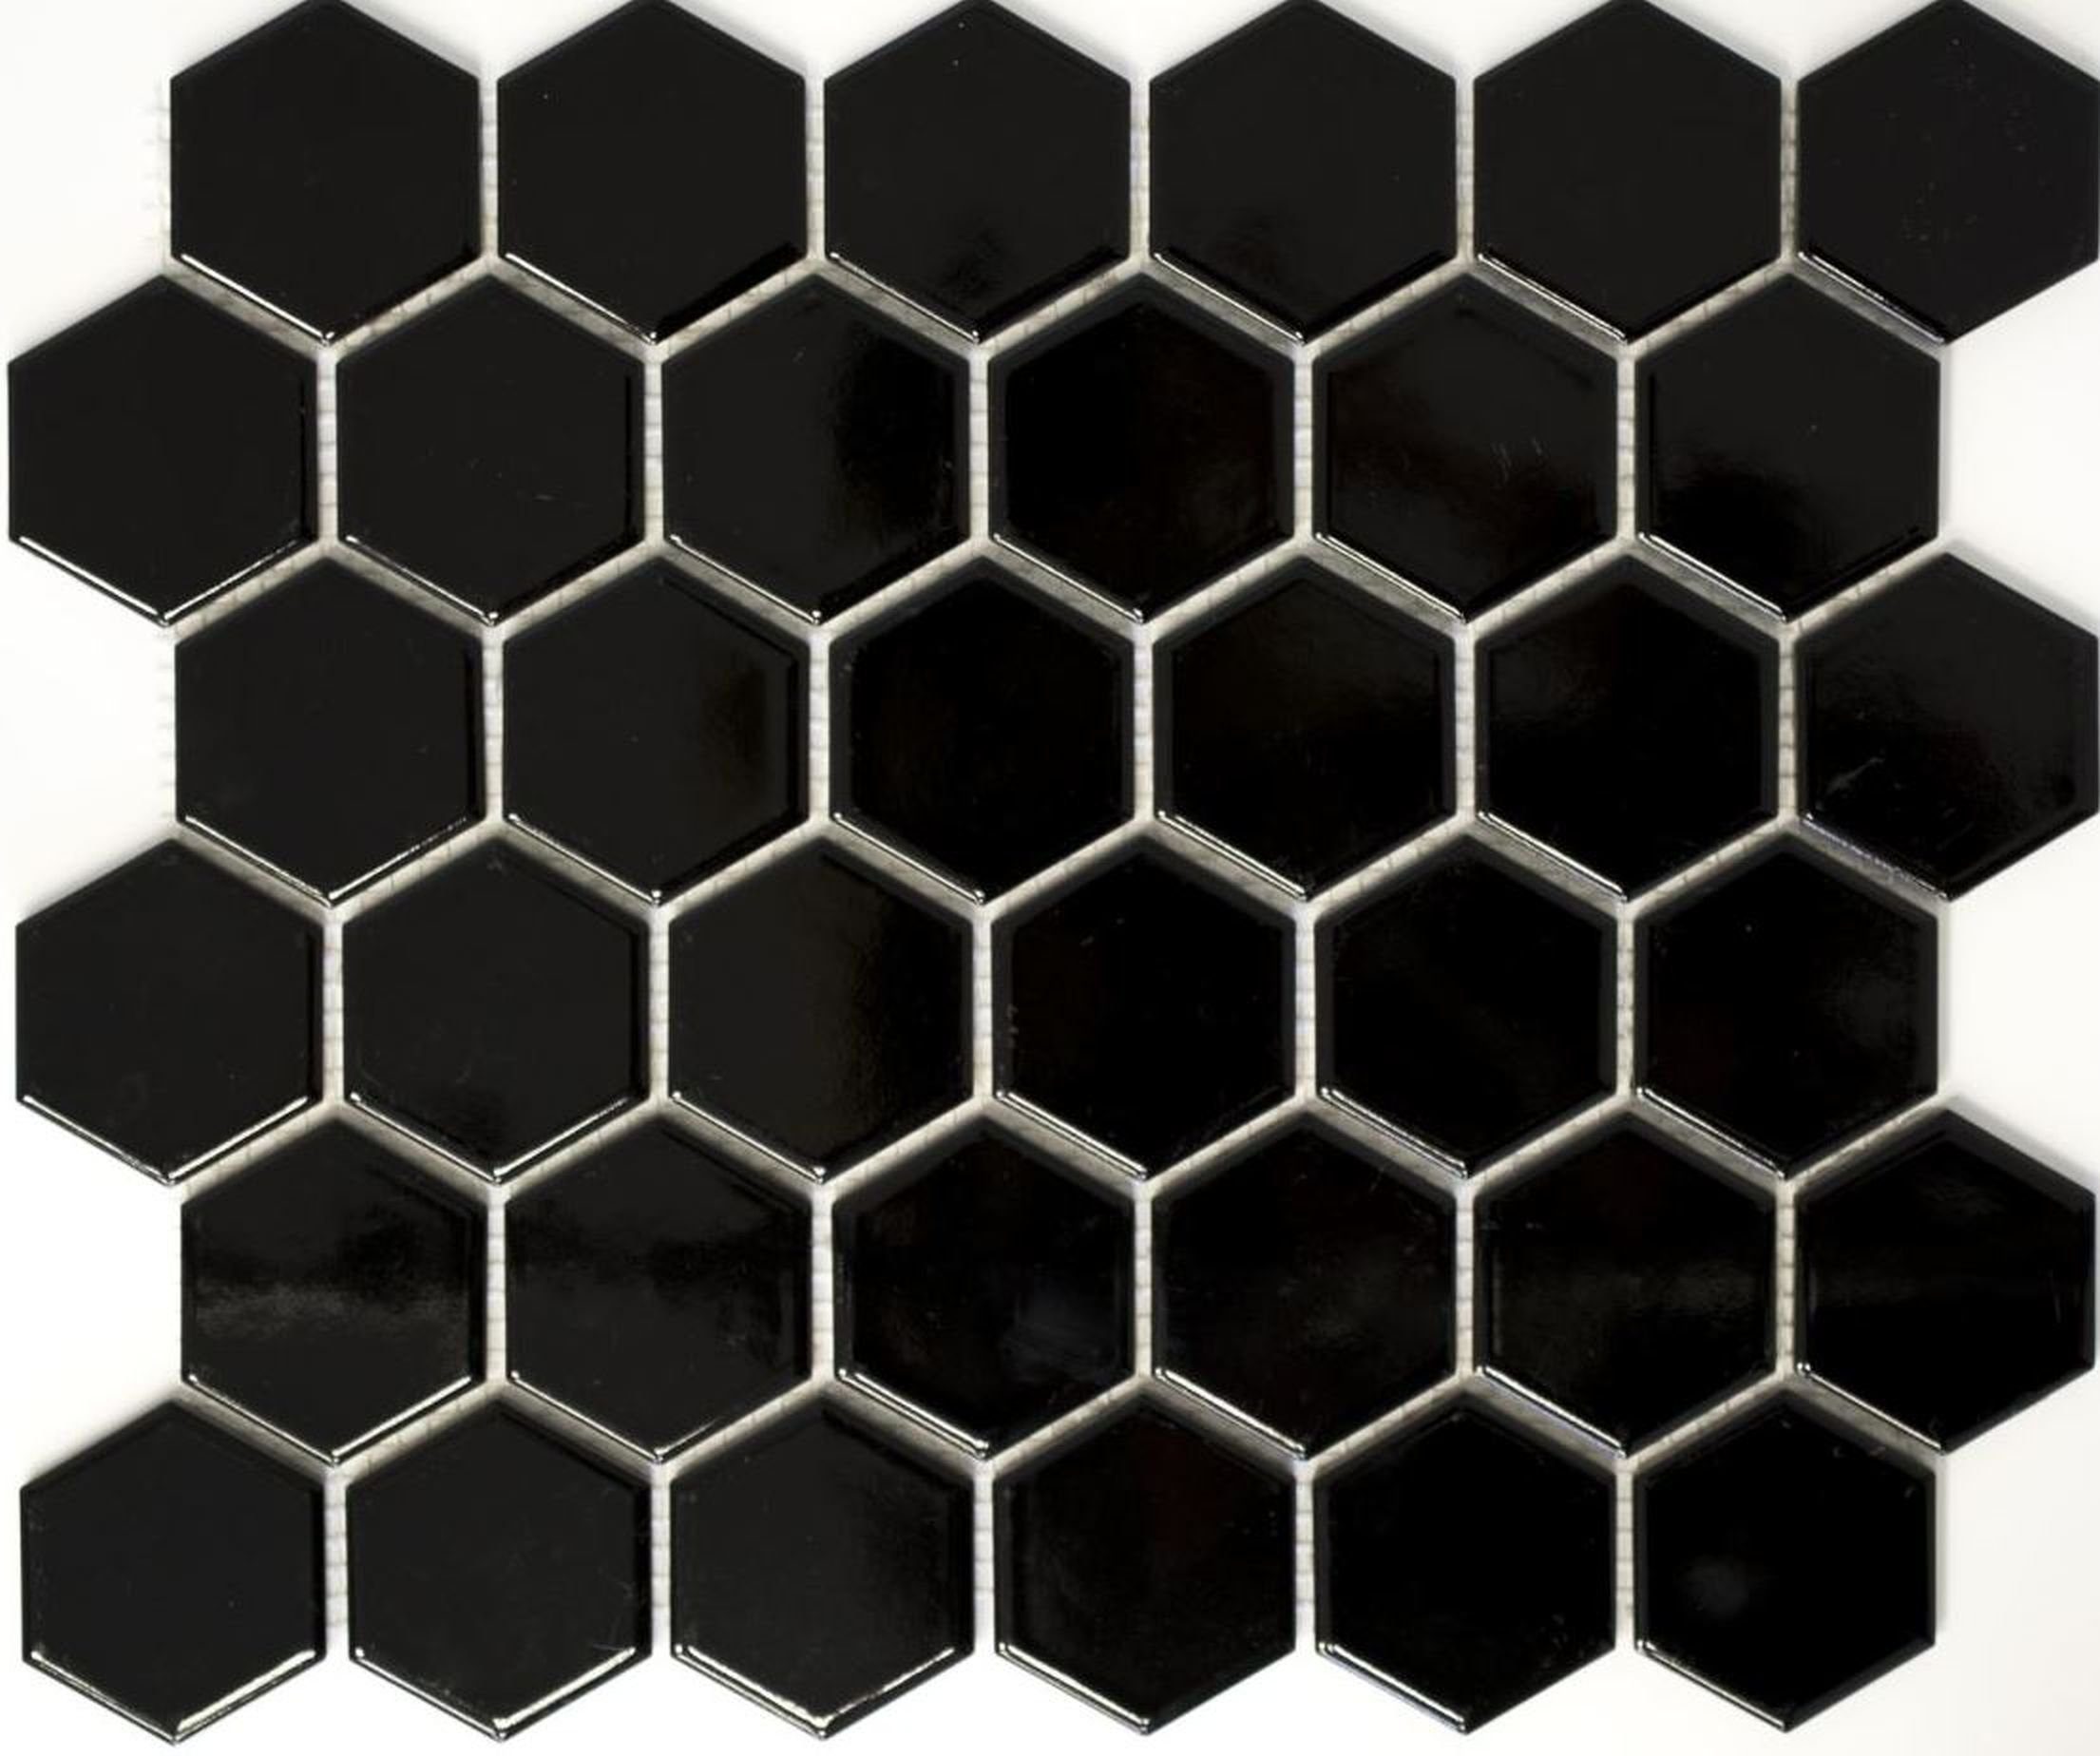 Mosani Mosaikfliesen Sechseck Mosaik Fliese Keramik schwarz glänzend Dusche Küche Bad